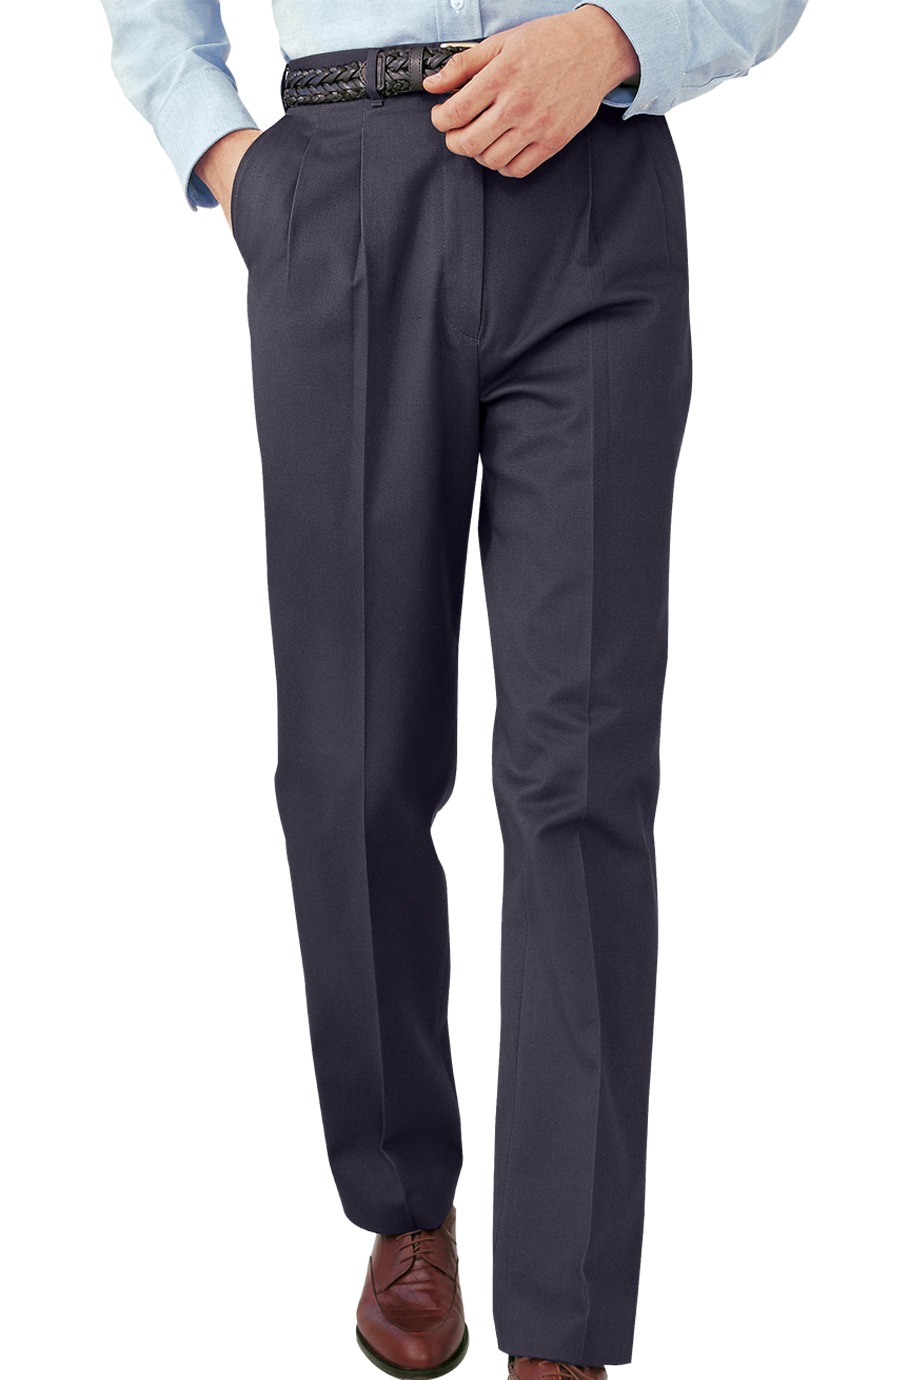 Edwards Garment 2630 - Men's All Cotton Pleated Pant